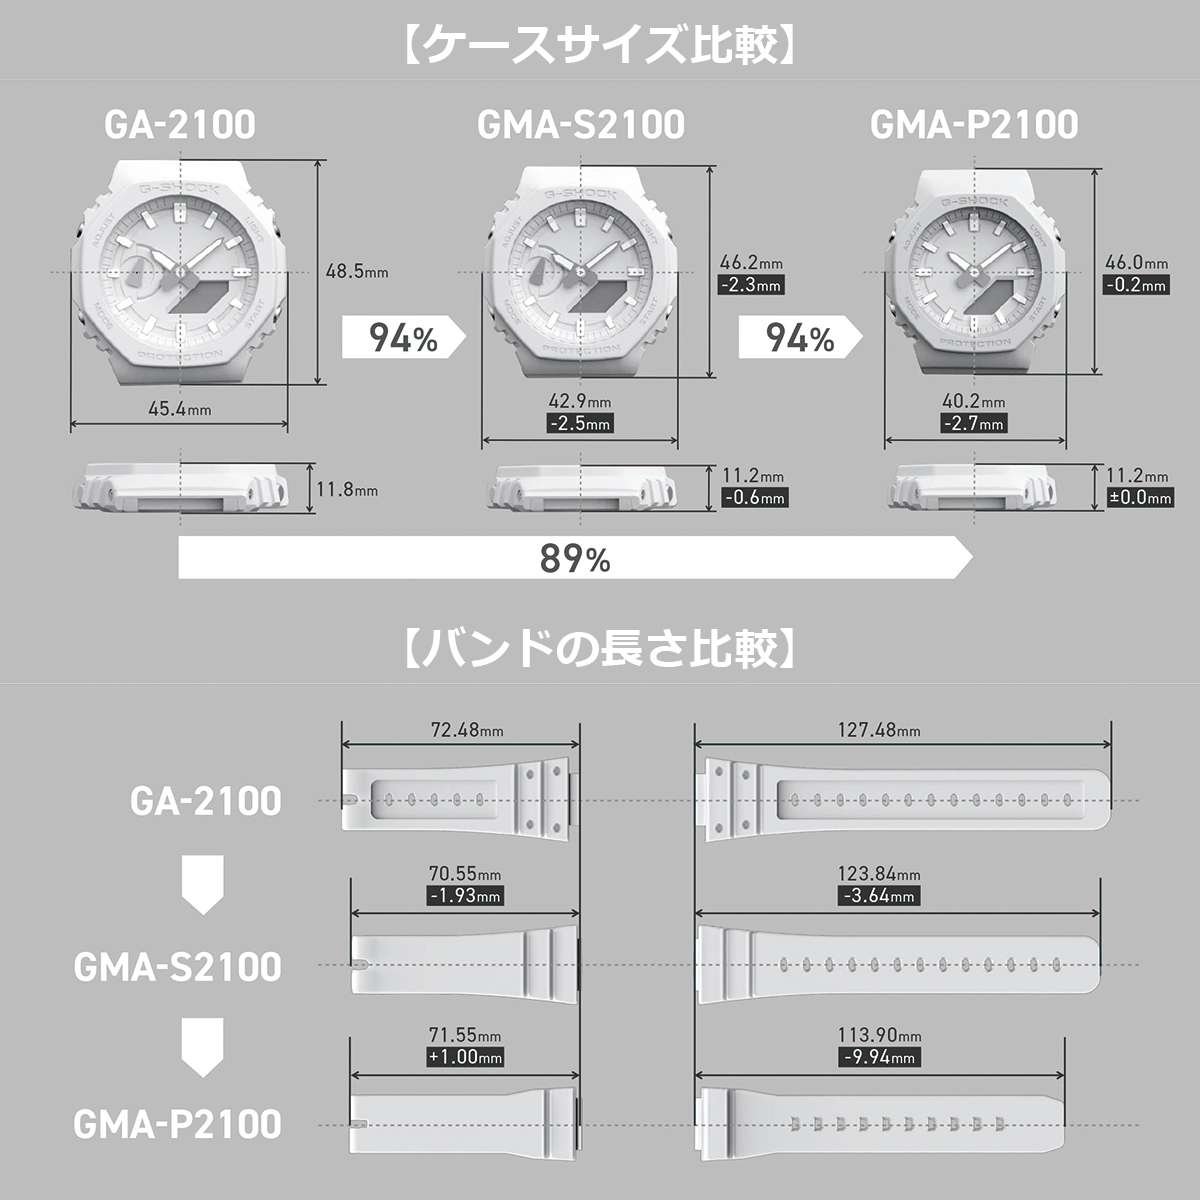 G-SHOCK コンパクトサイズ ITZY コラボレーションモデル GMA-P2100ZY 